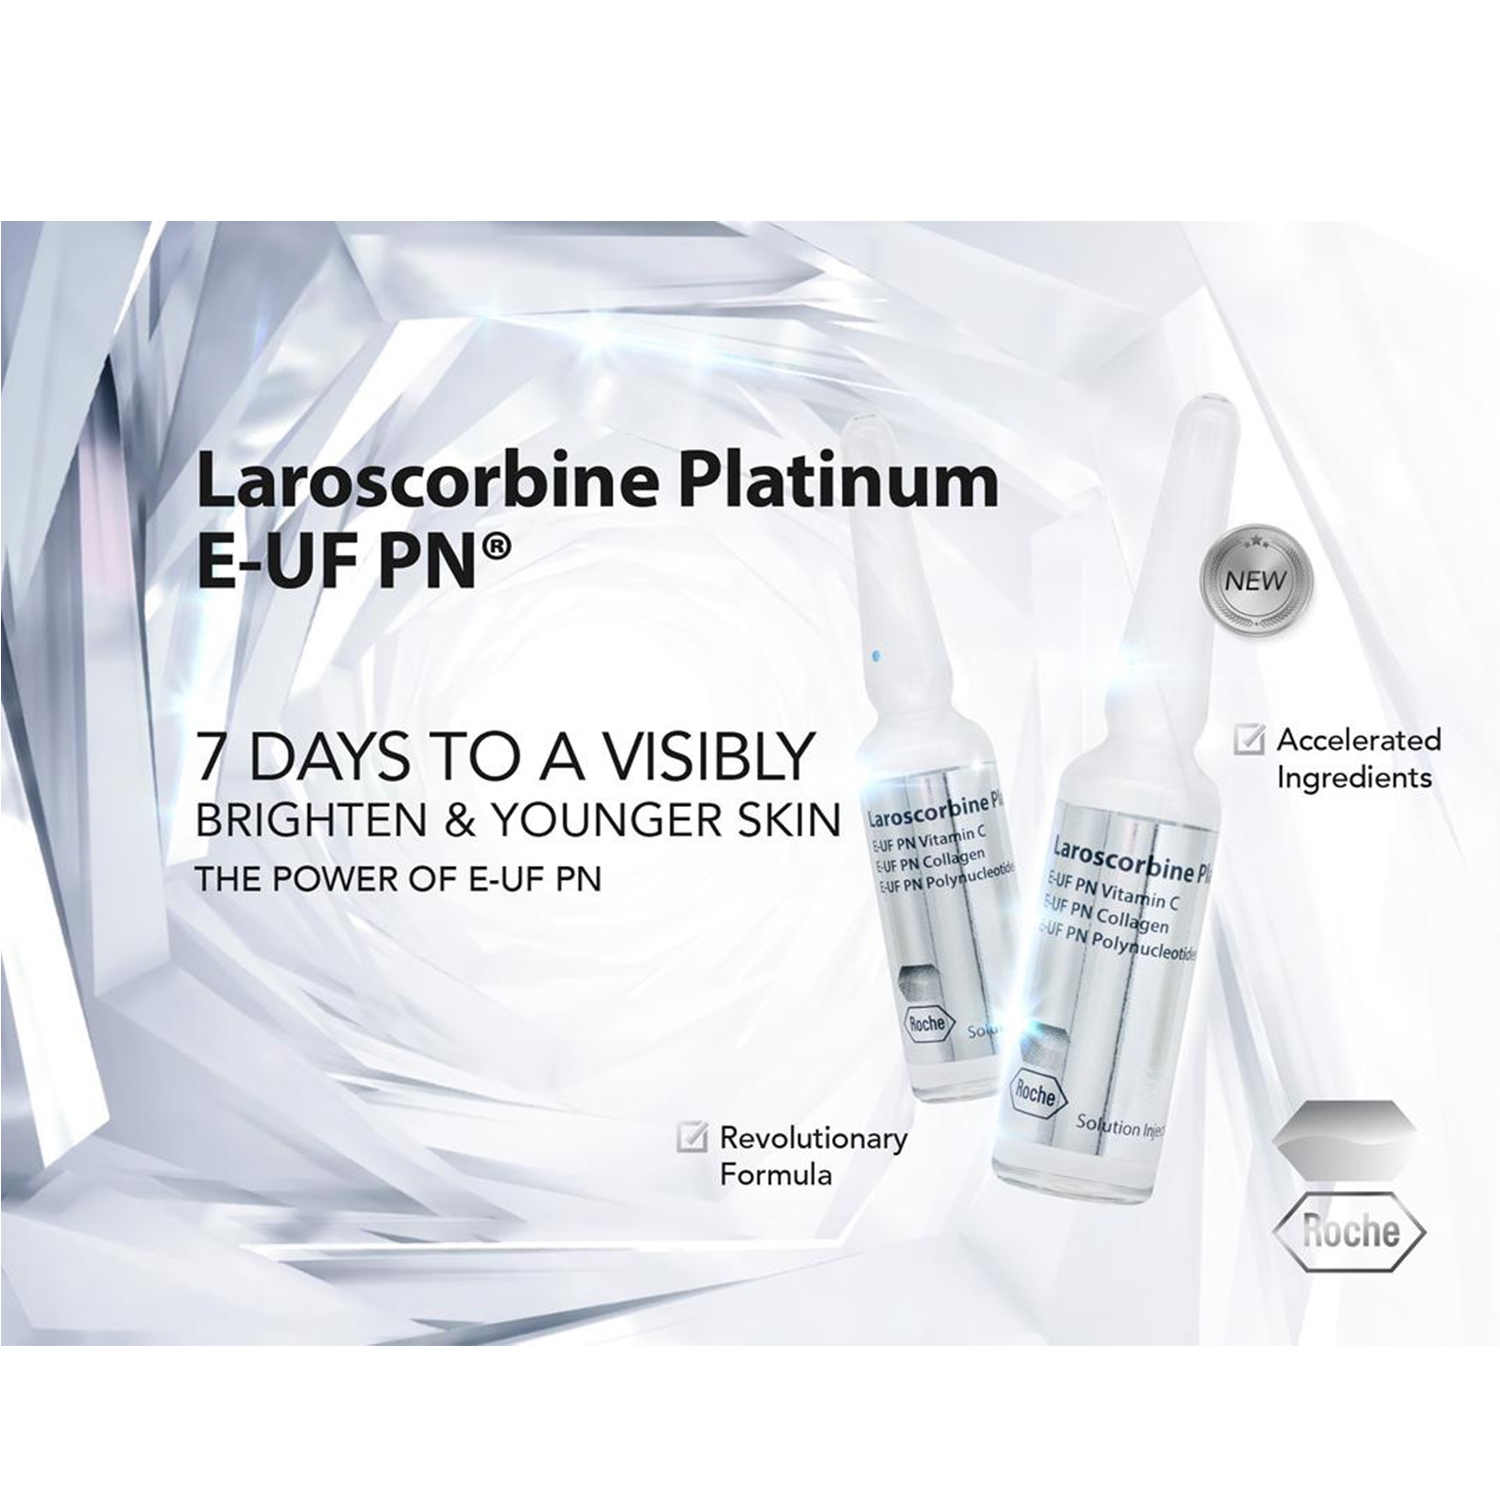 Lascorbine platinum E-UF PN Injections